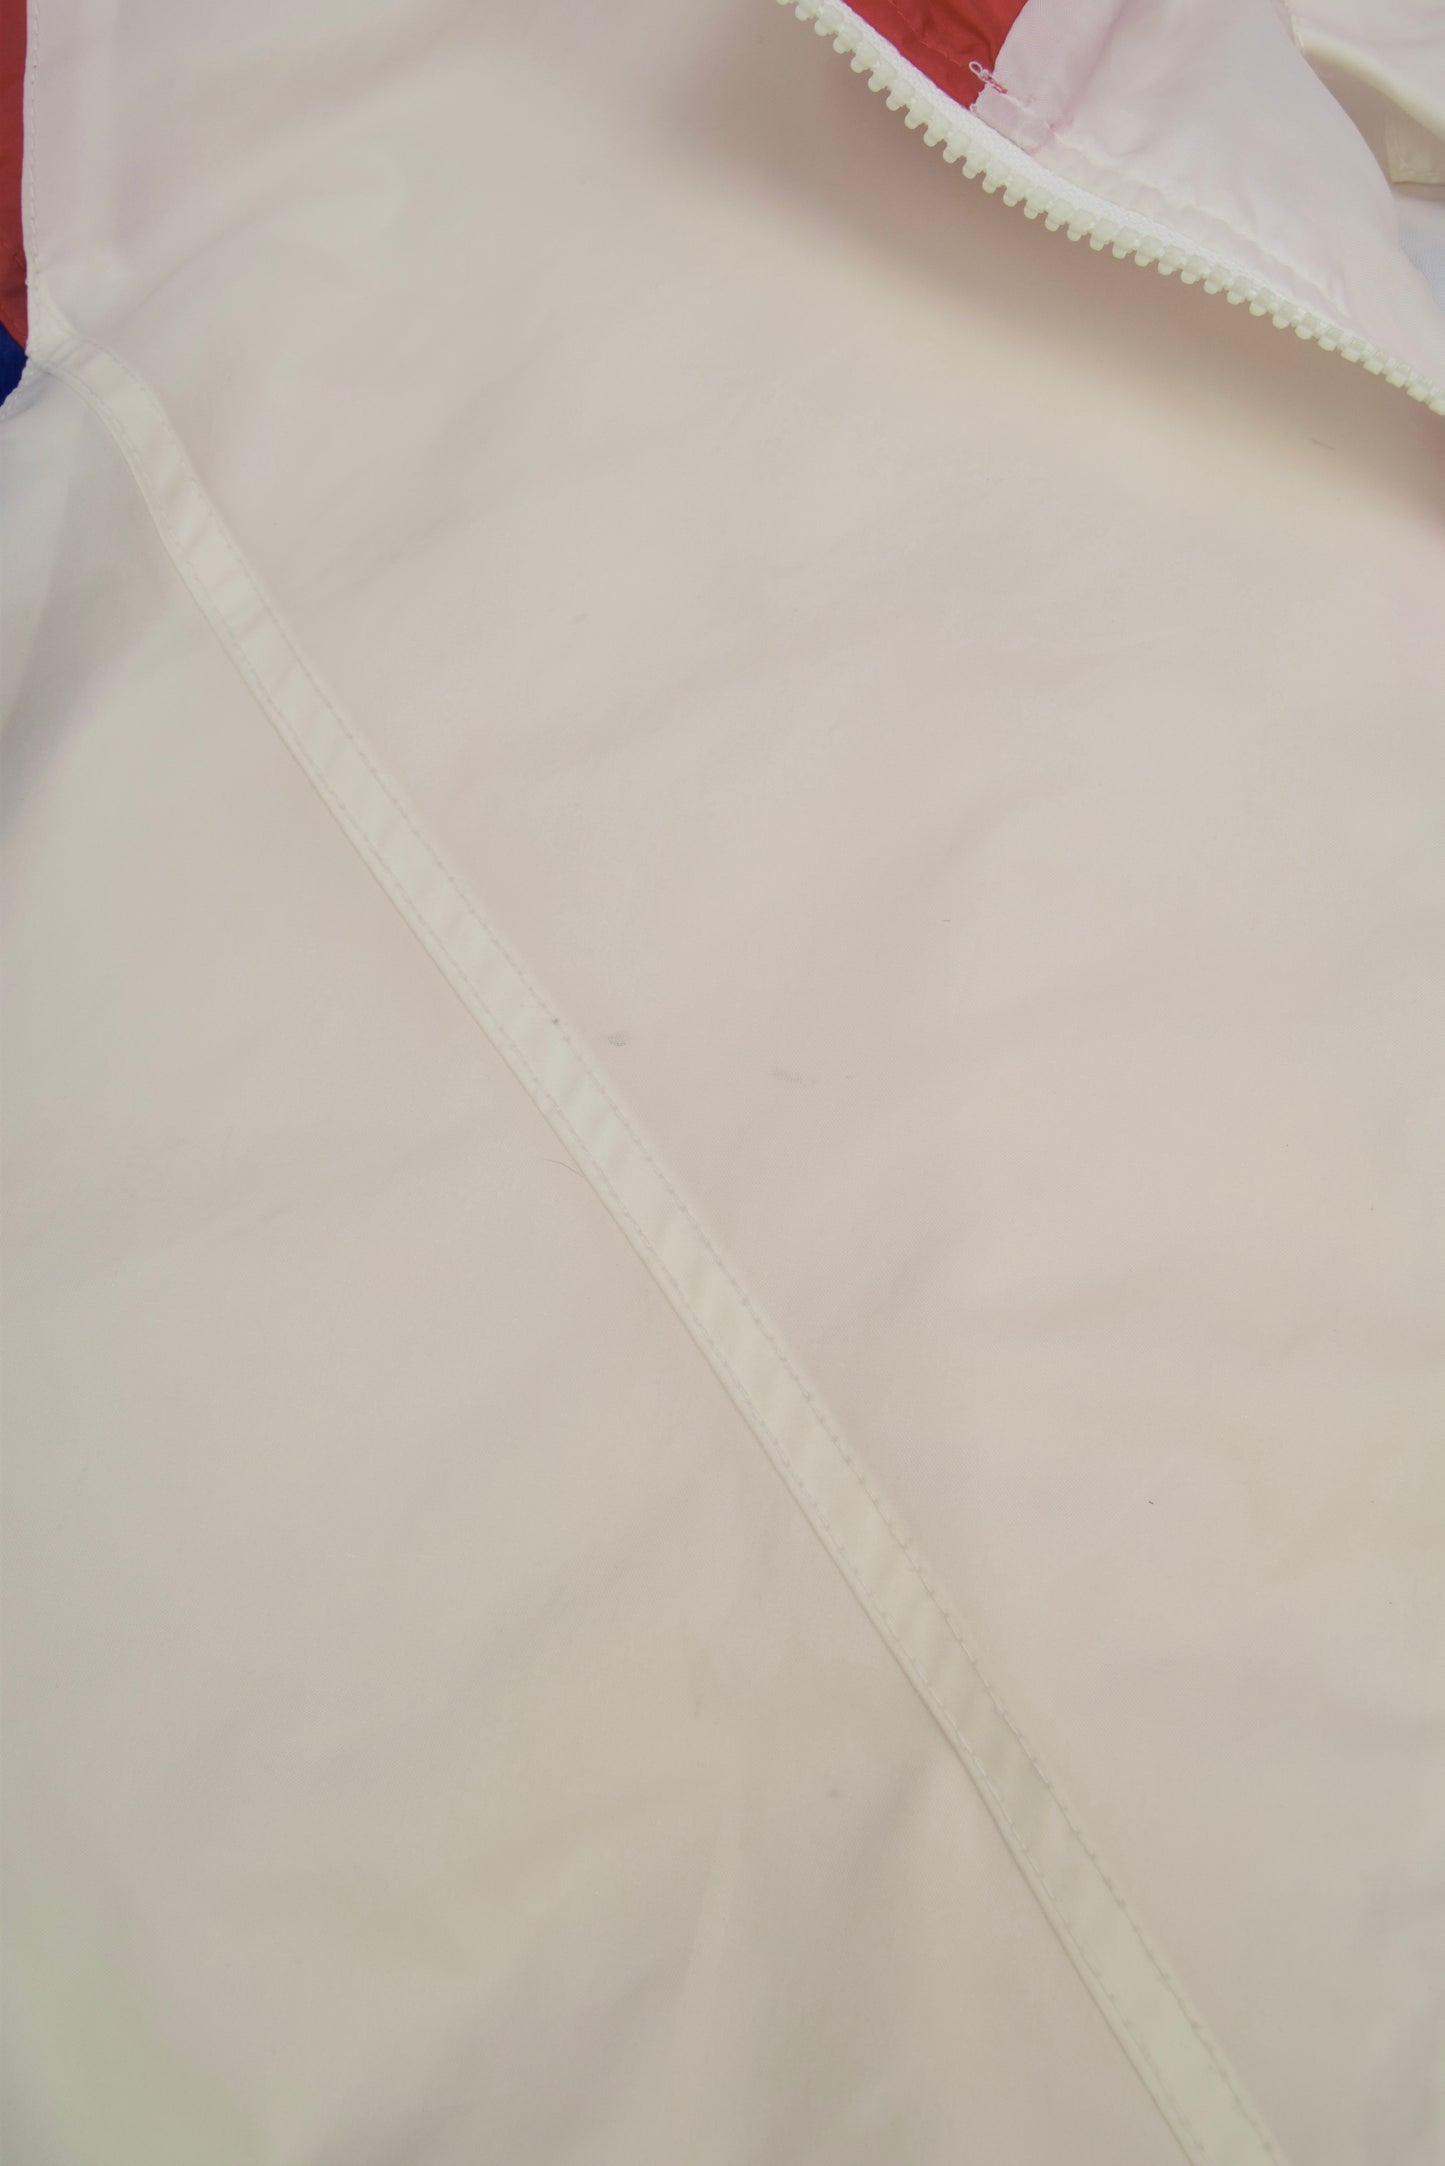 Vintage Starter Atlanta 1996 Olympic Games Jackets / Shell Size M-L USA Flag White